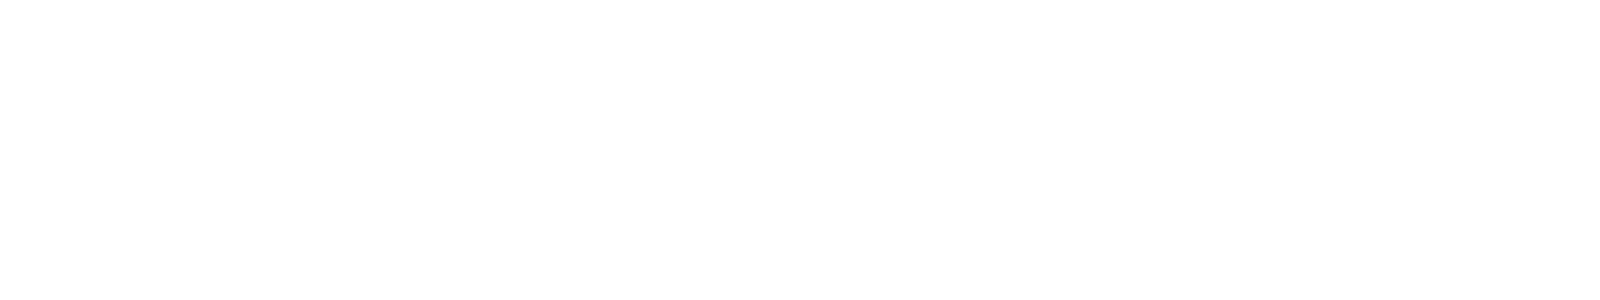 s7law logo biale2 - Program Partnerski